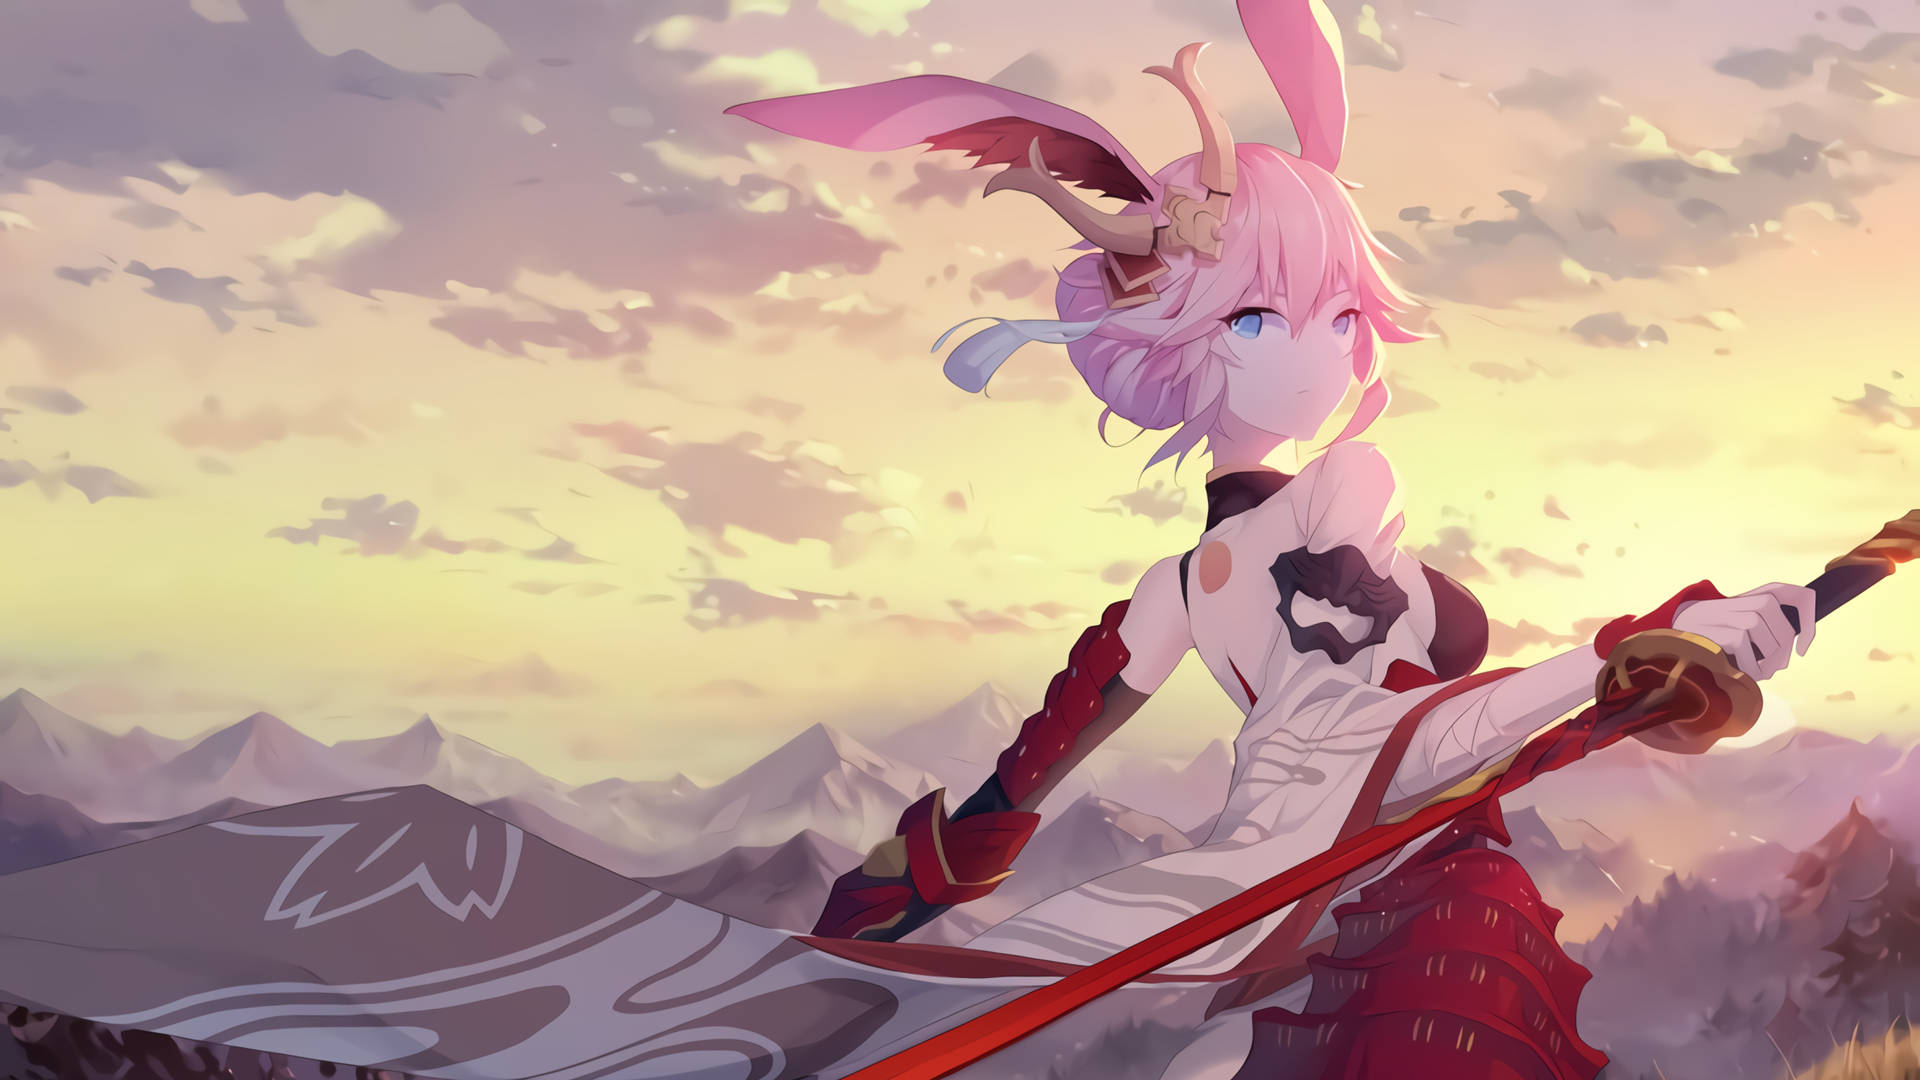 Cool Anime Bunny Girl With Sword Wallpaper